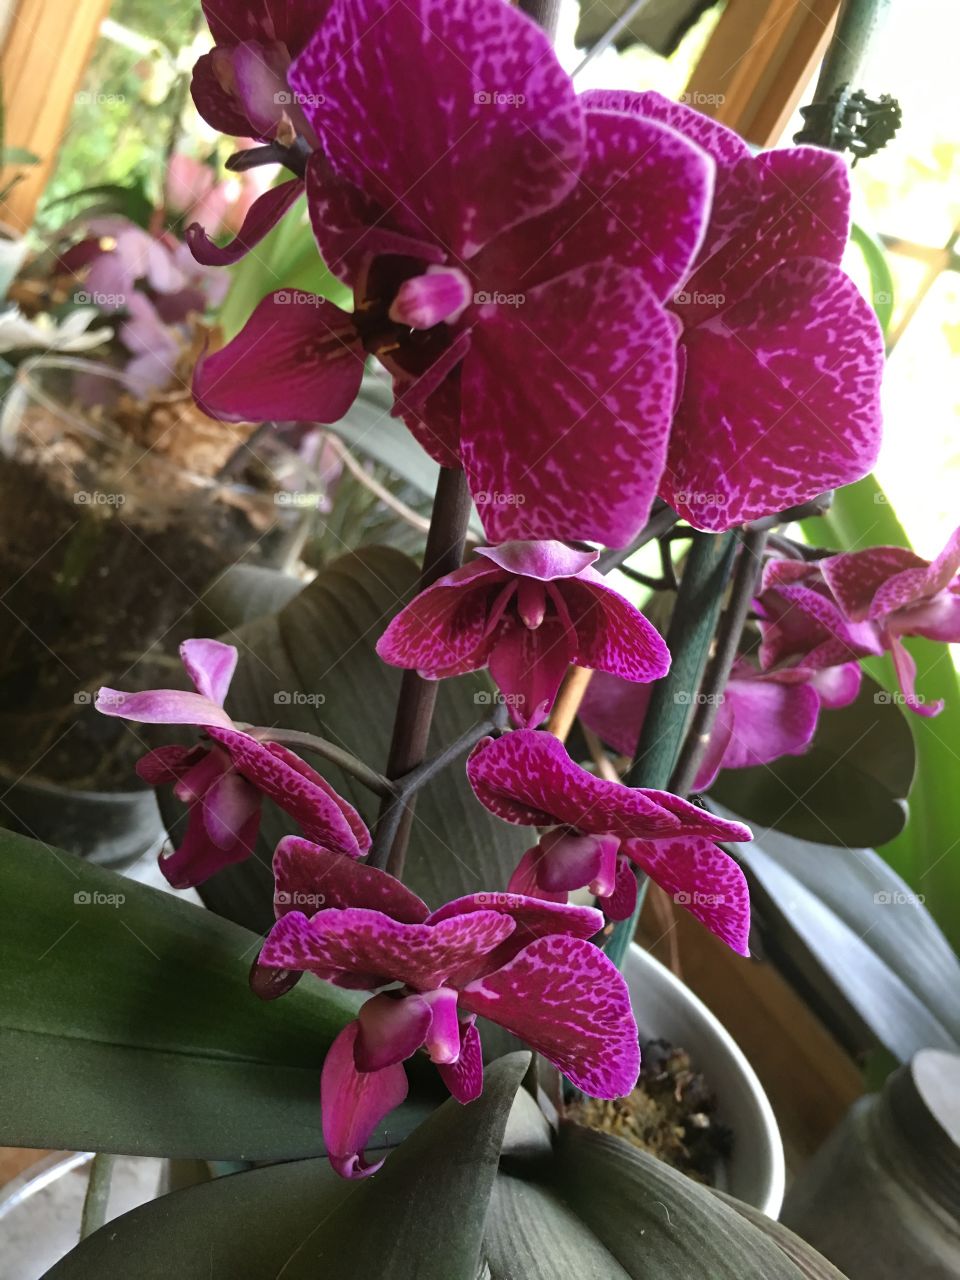 Orchids galore